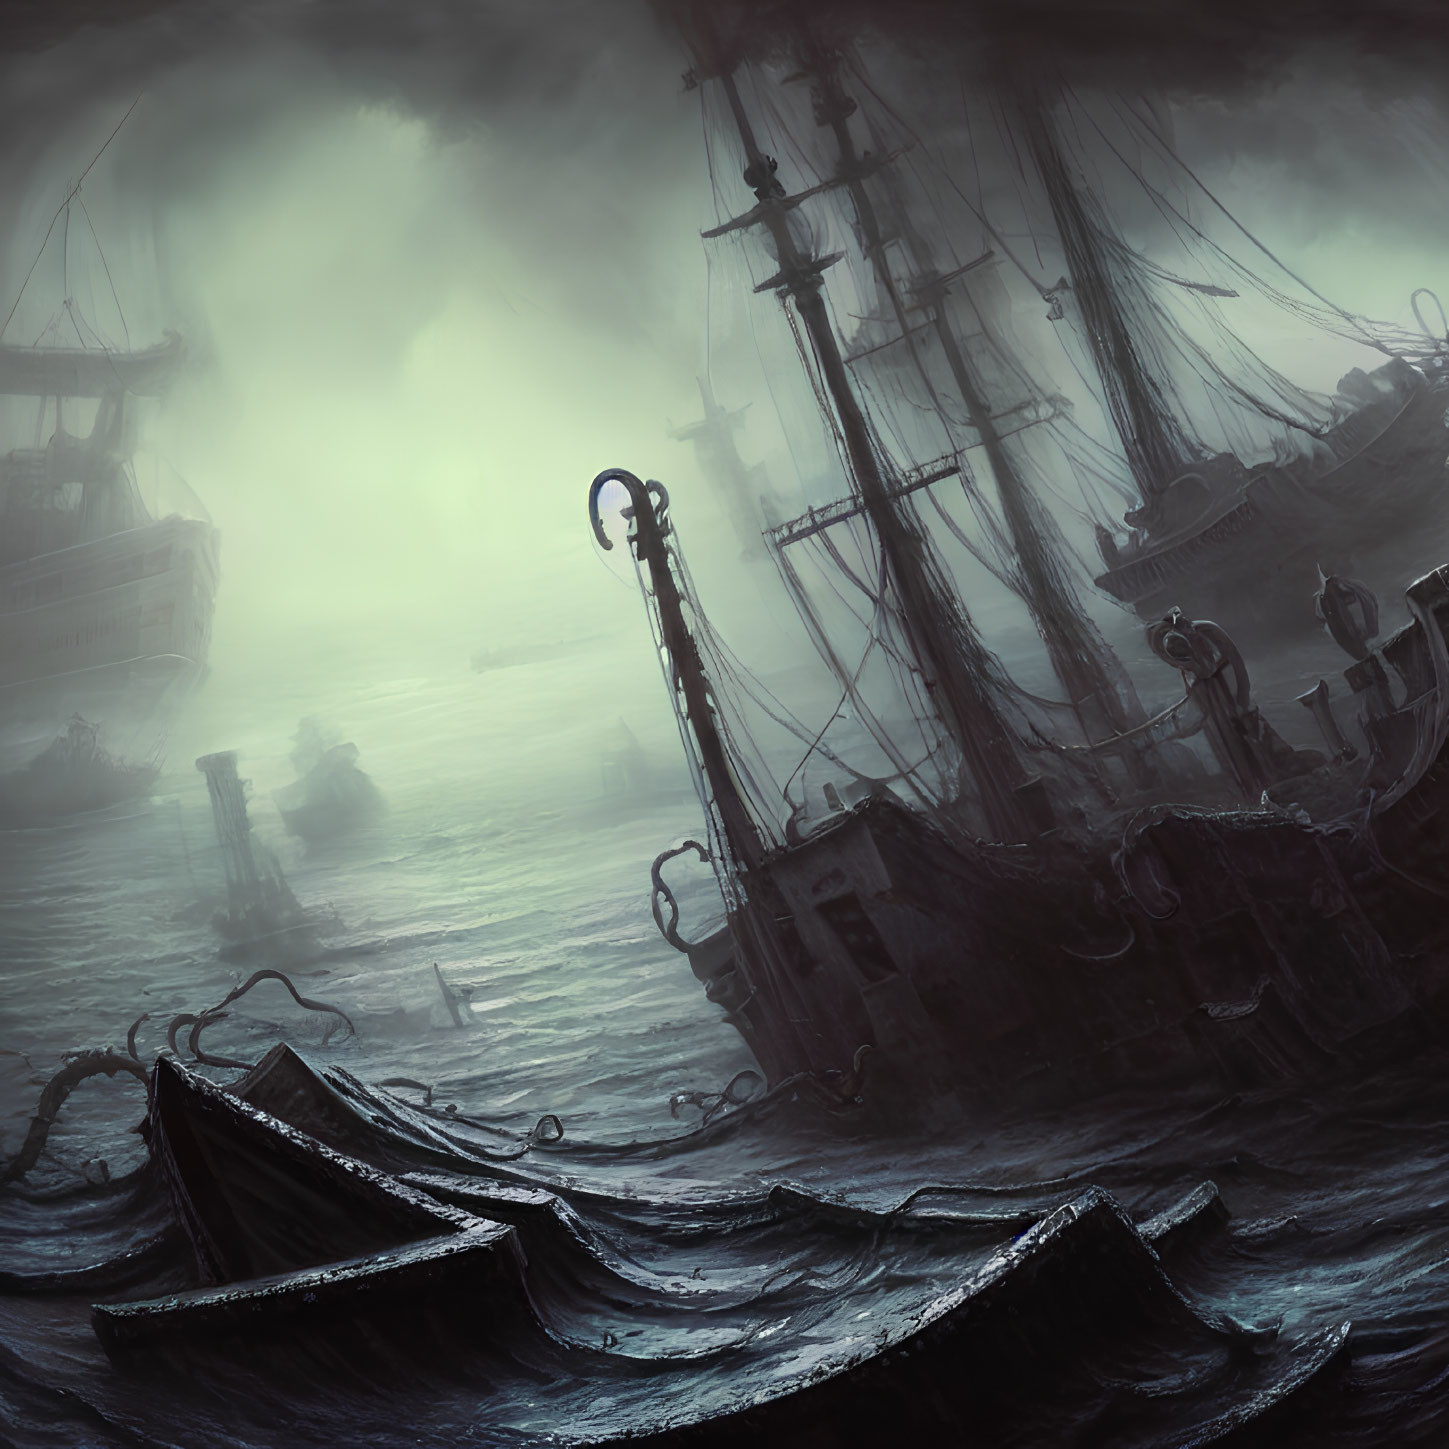 Silhouetted ships in mist on dark, choppy seascape